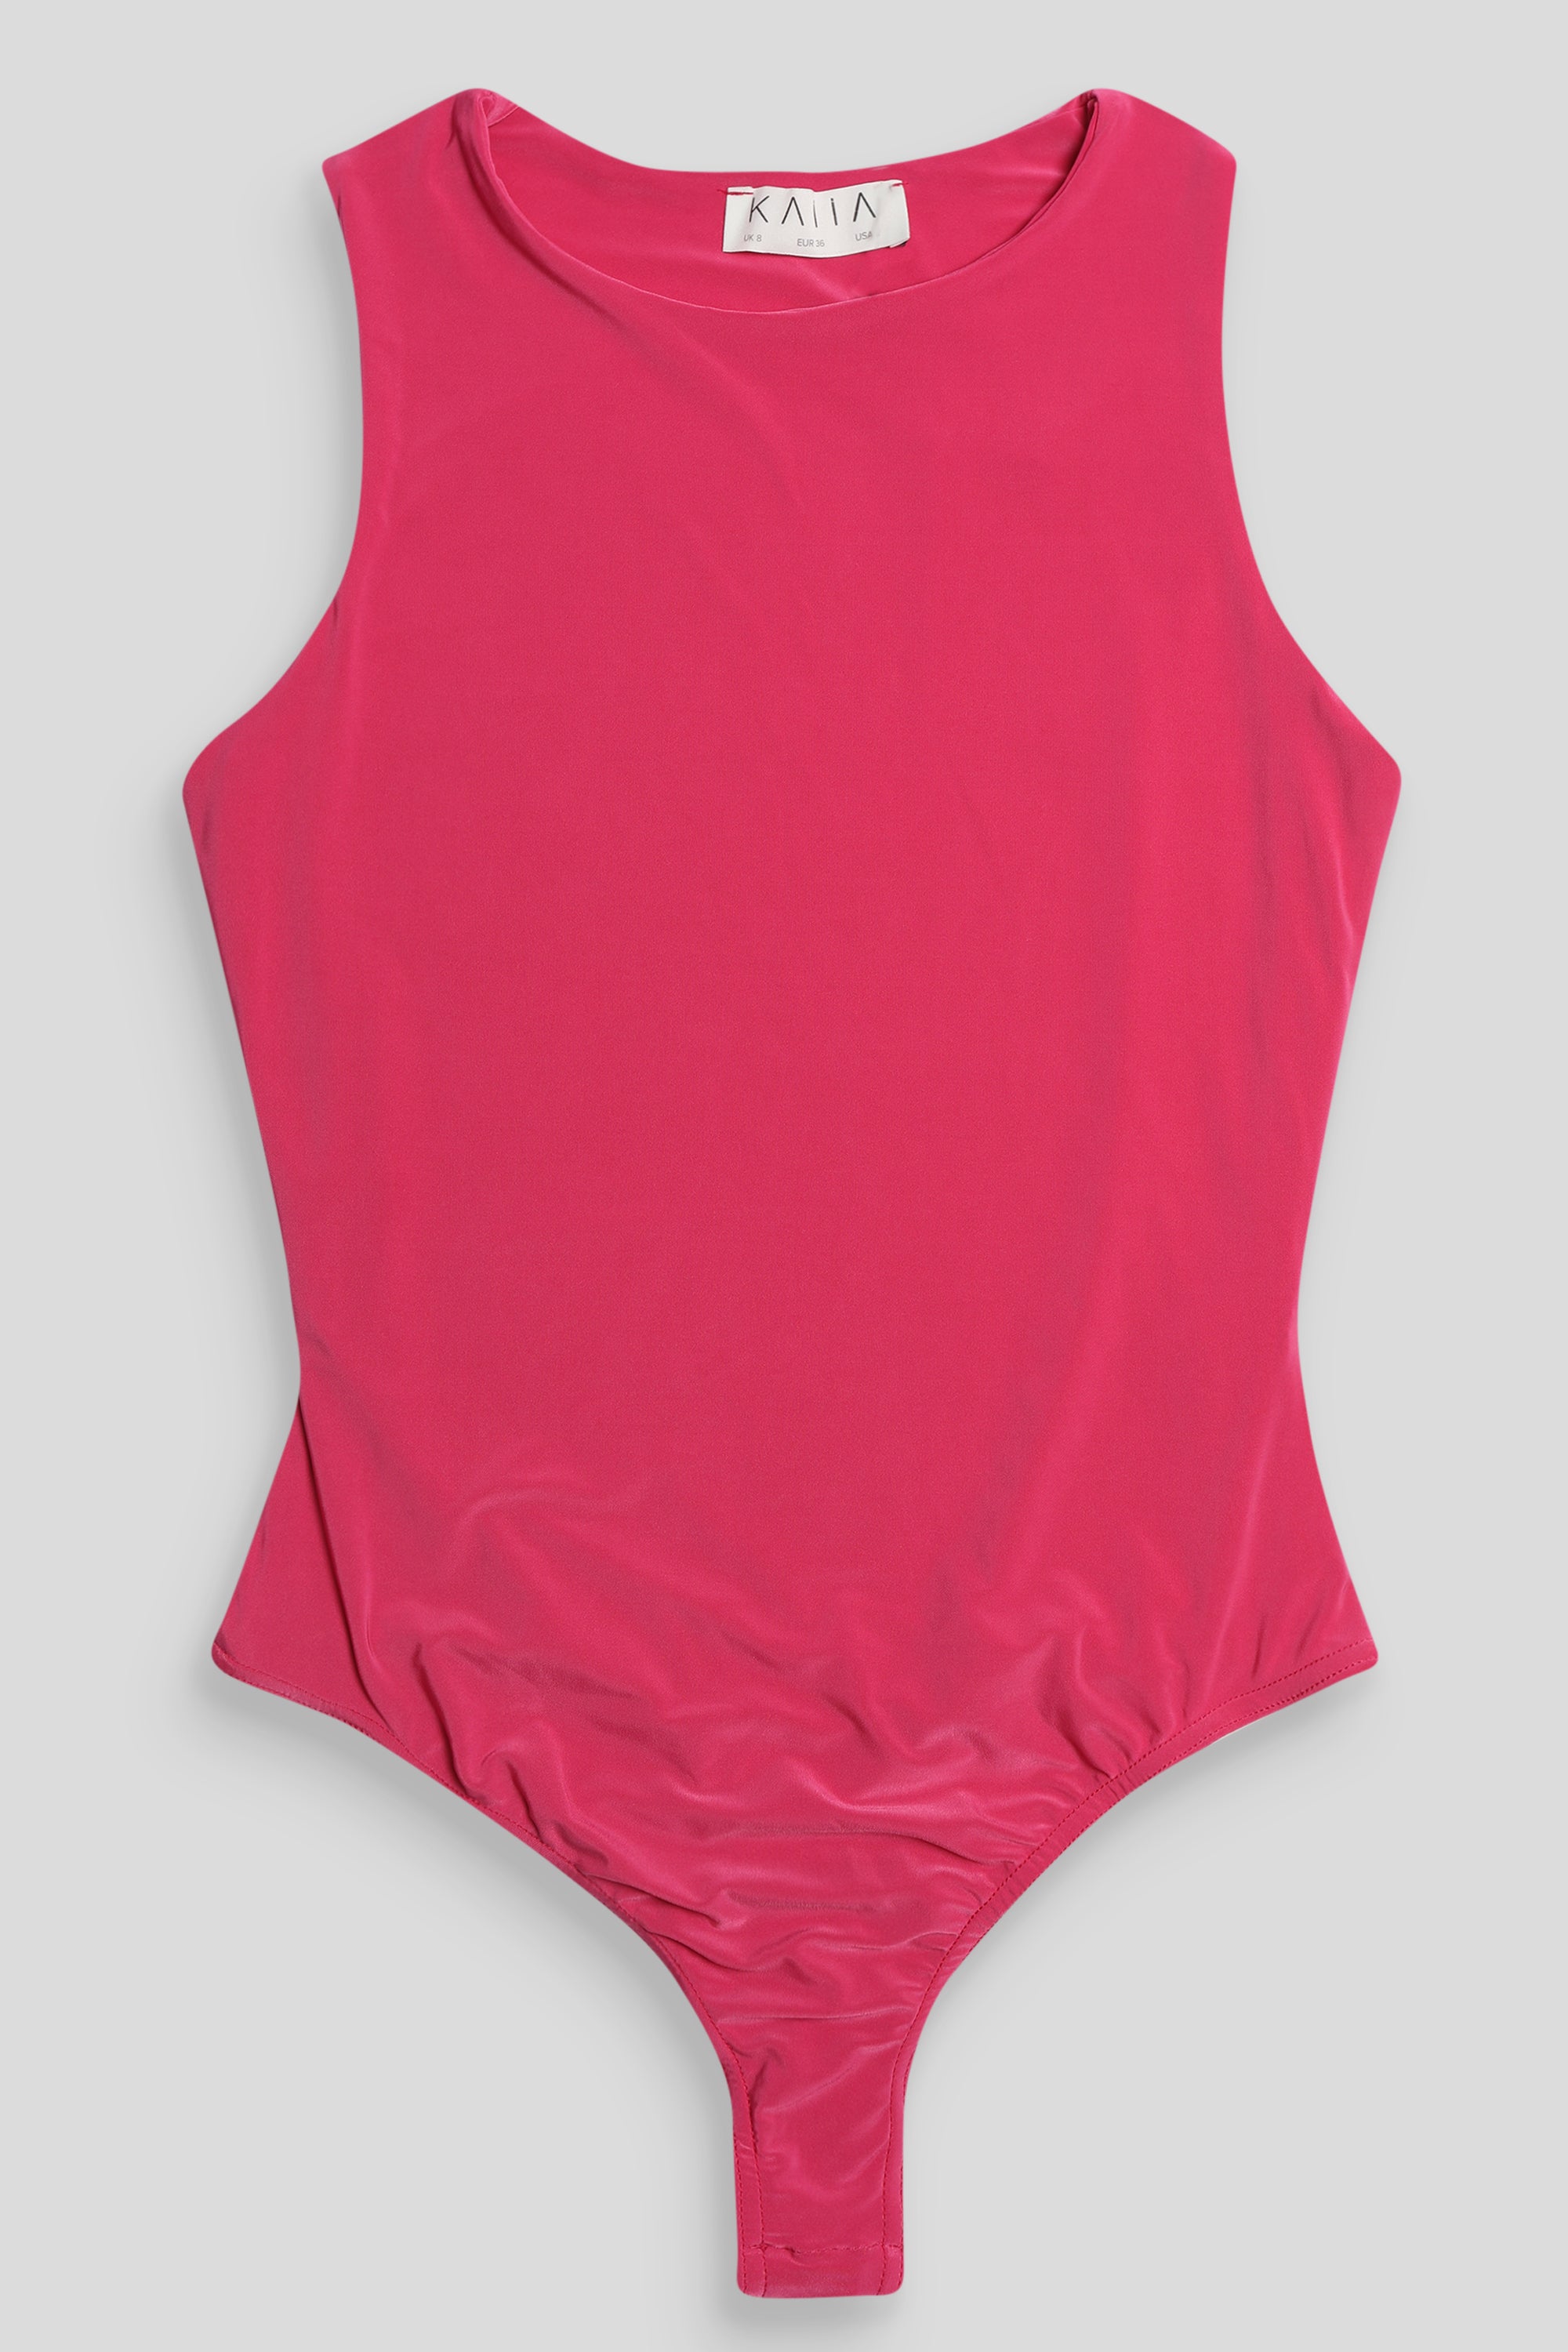 Essential Bodysuit Pink UK 18 product